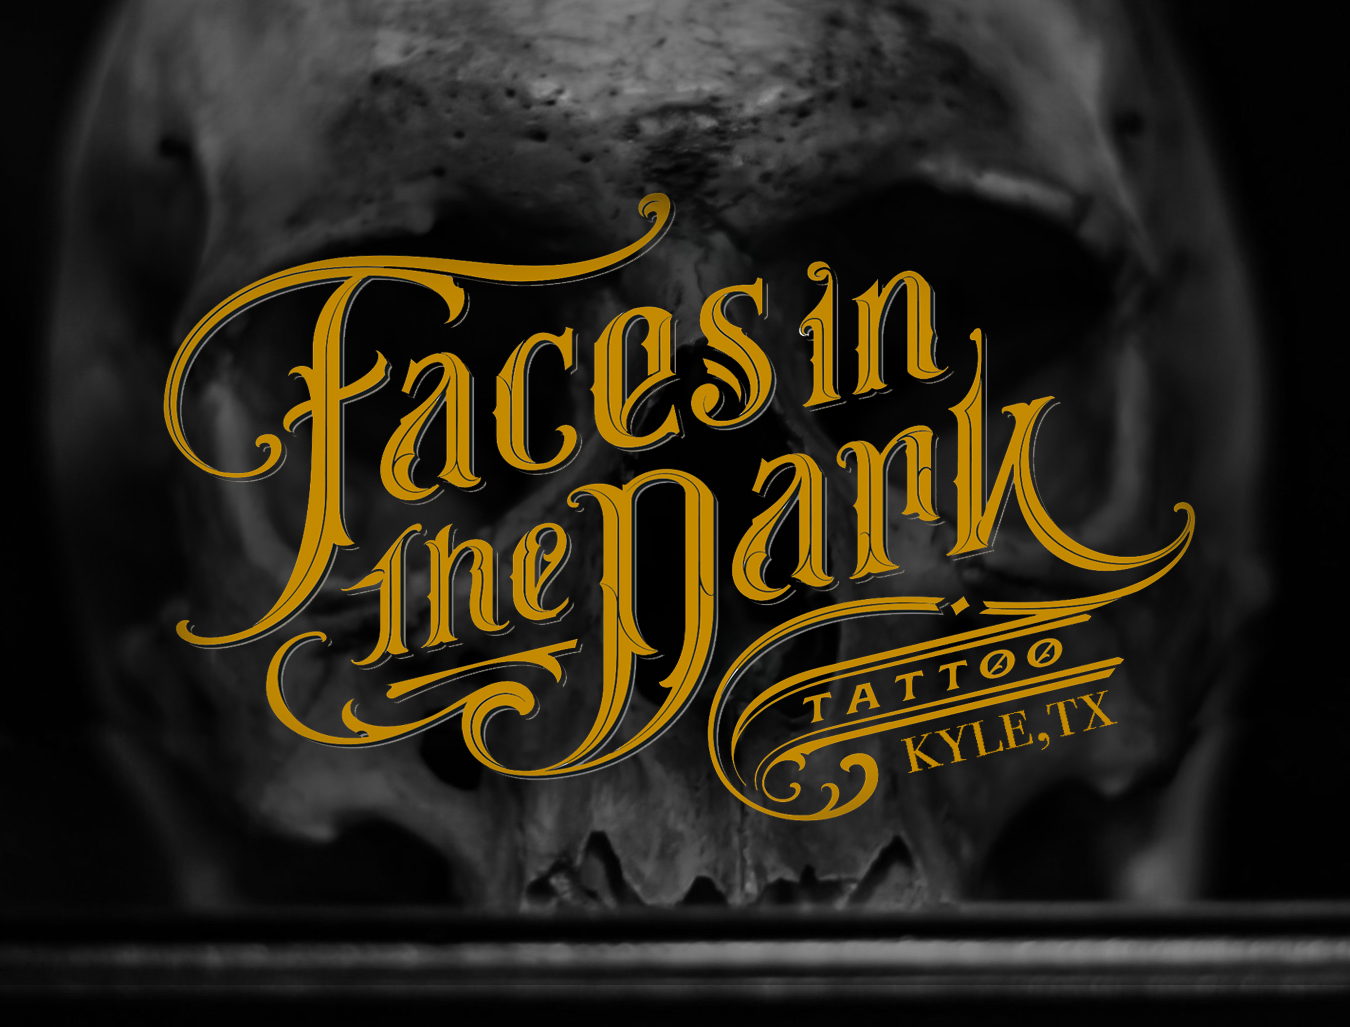 Faces in the Dark Tattoo